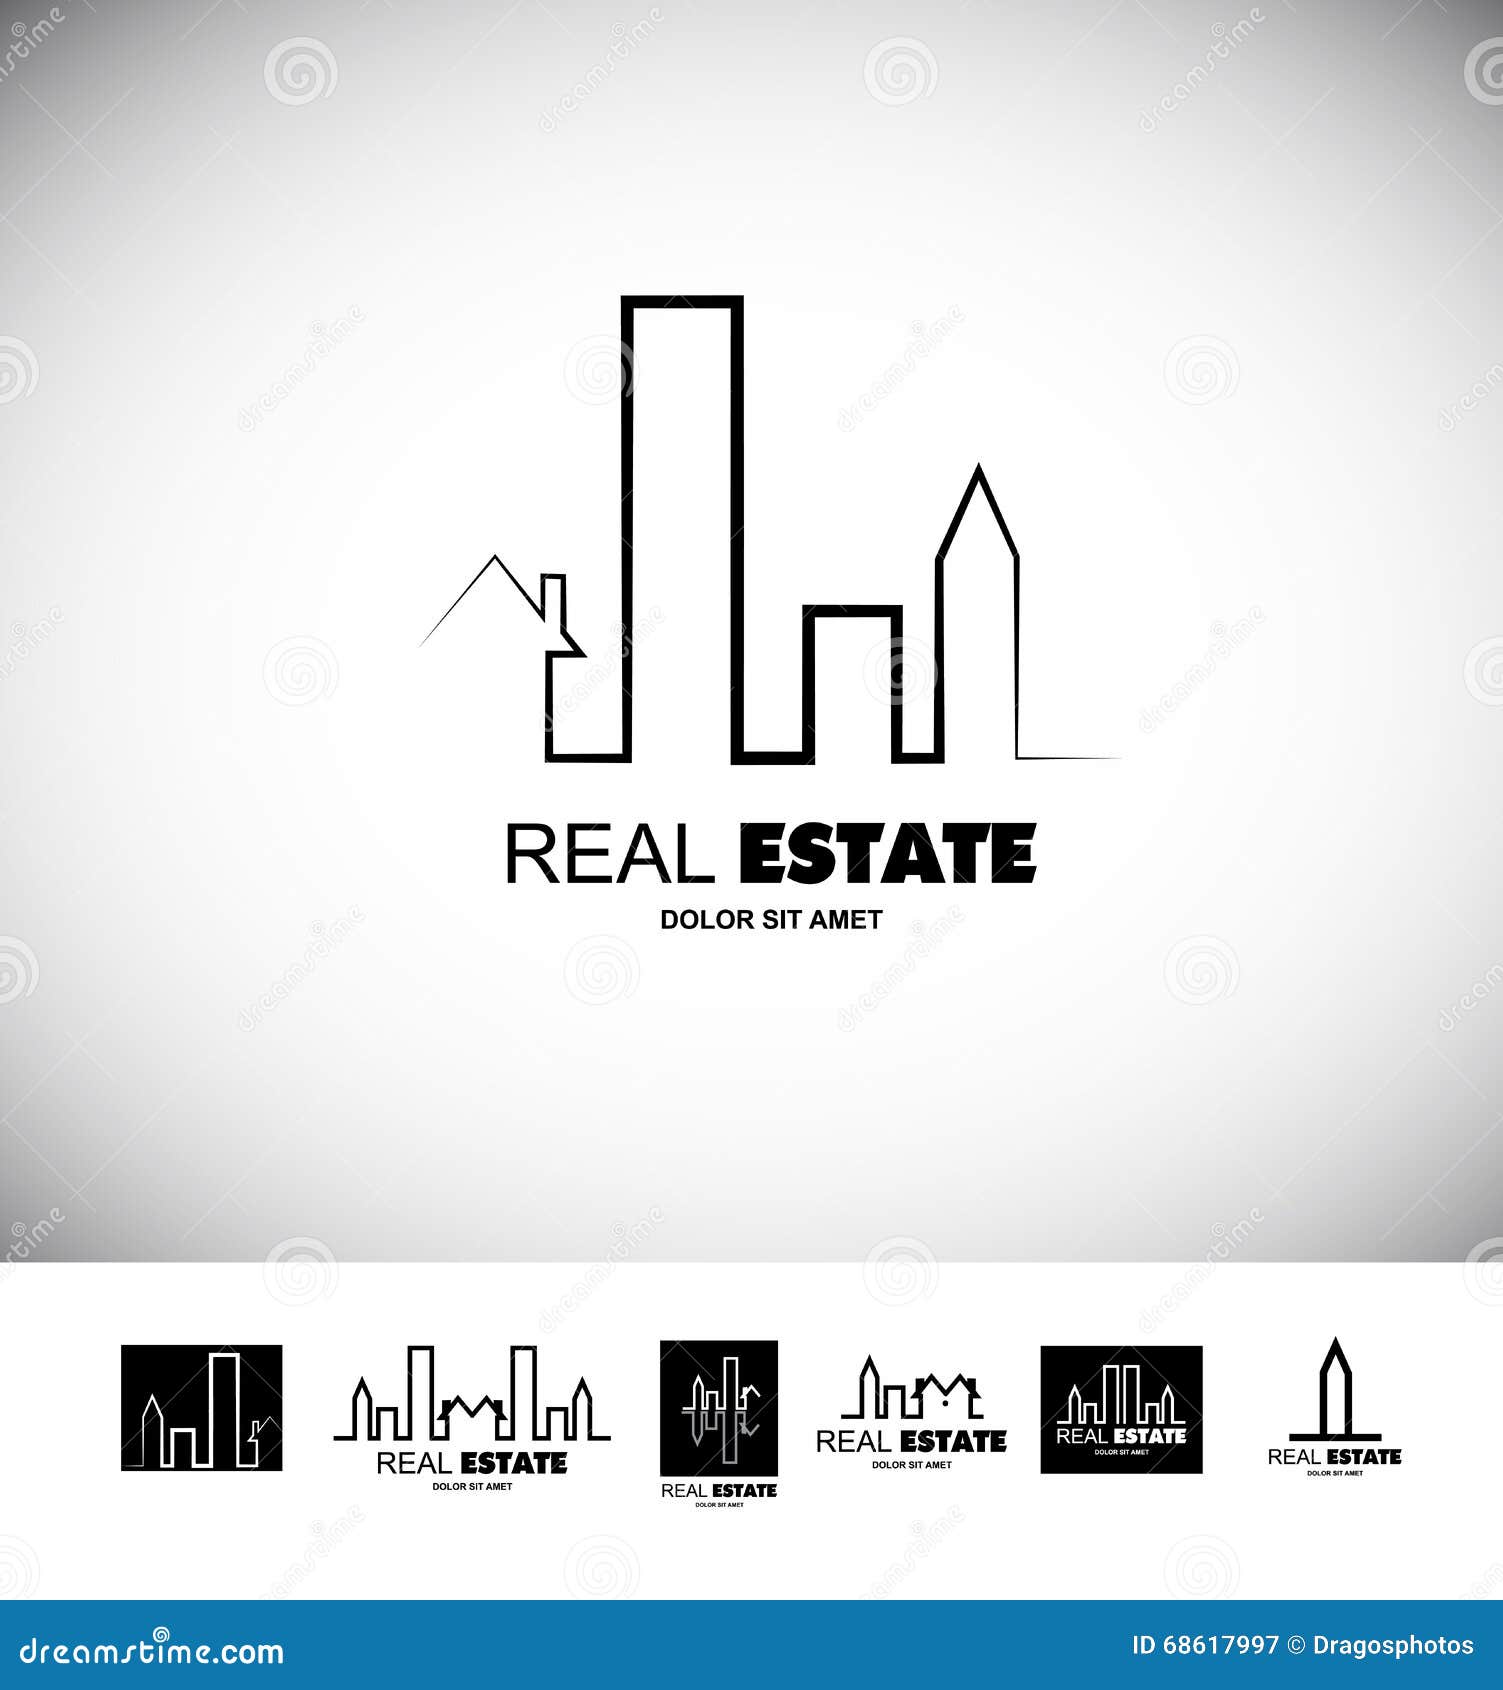 Real Estate